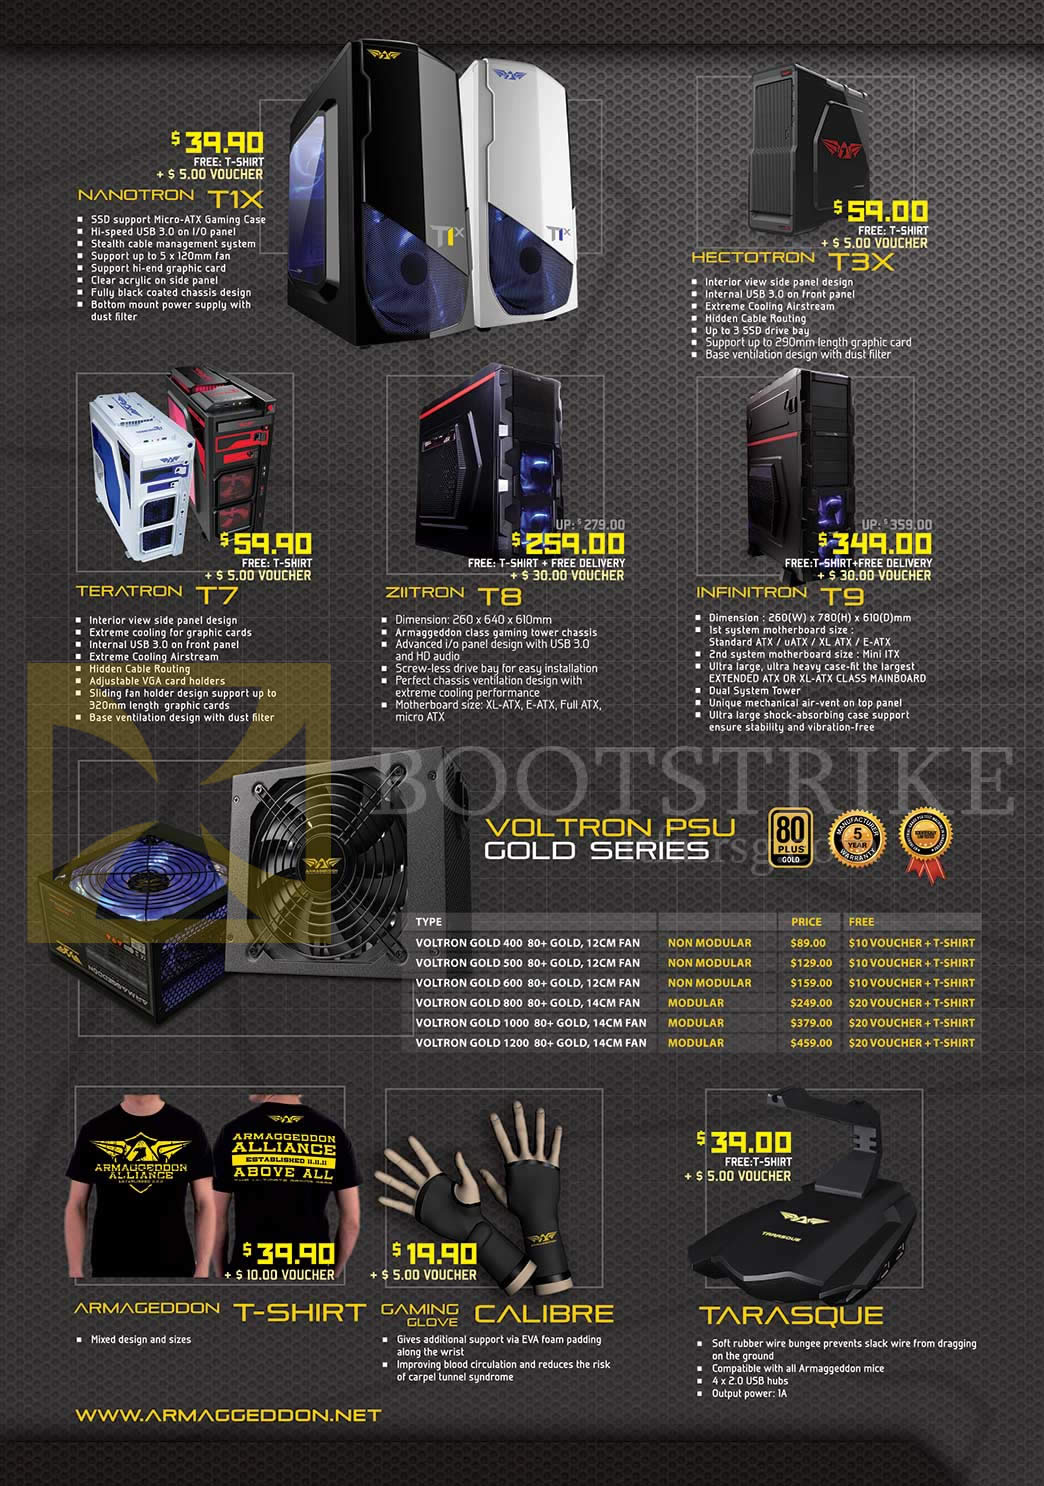 IT SHOW 2015 price list image brochure of Armaggeddon Desktop PC Case, Fan, T-Shirt, Glove, Nanotron T1X, Hectotron T3X, Teratron T7, Ziitron T8, Infinitron T9, Voltron PSU Gold Series, Tarasque